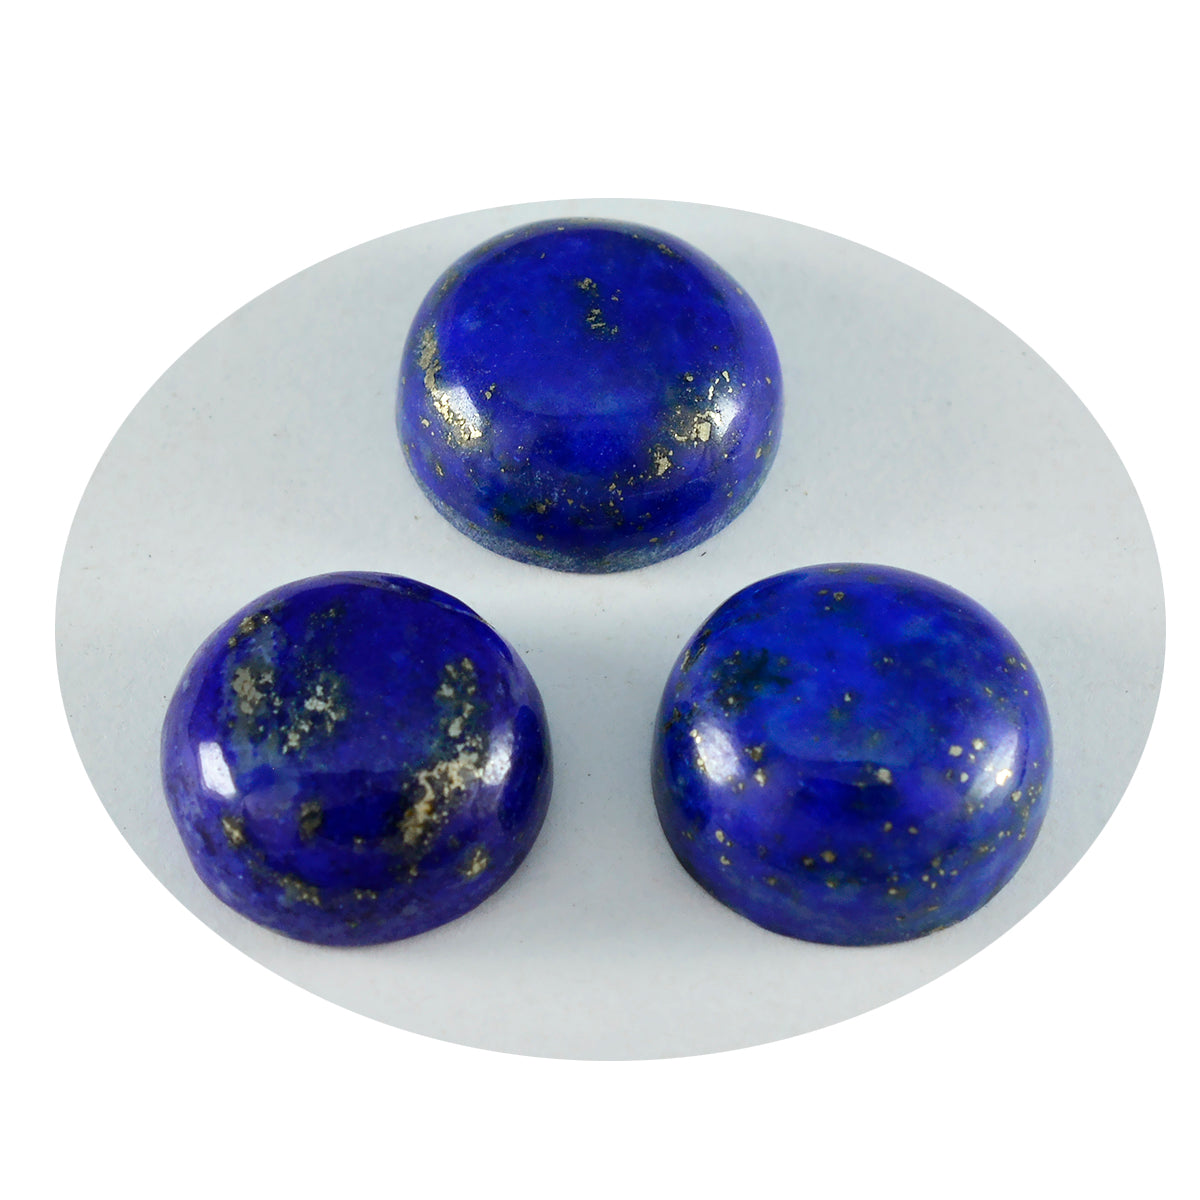 Riyogems 1PC Blue Lapis Lazuli Cabochon 14x14 mm Round Shape startling Quality Loose Gems